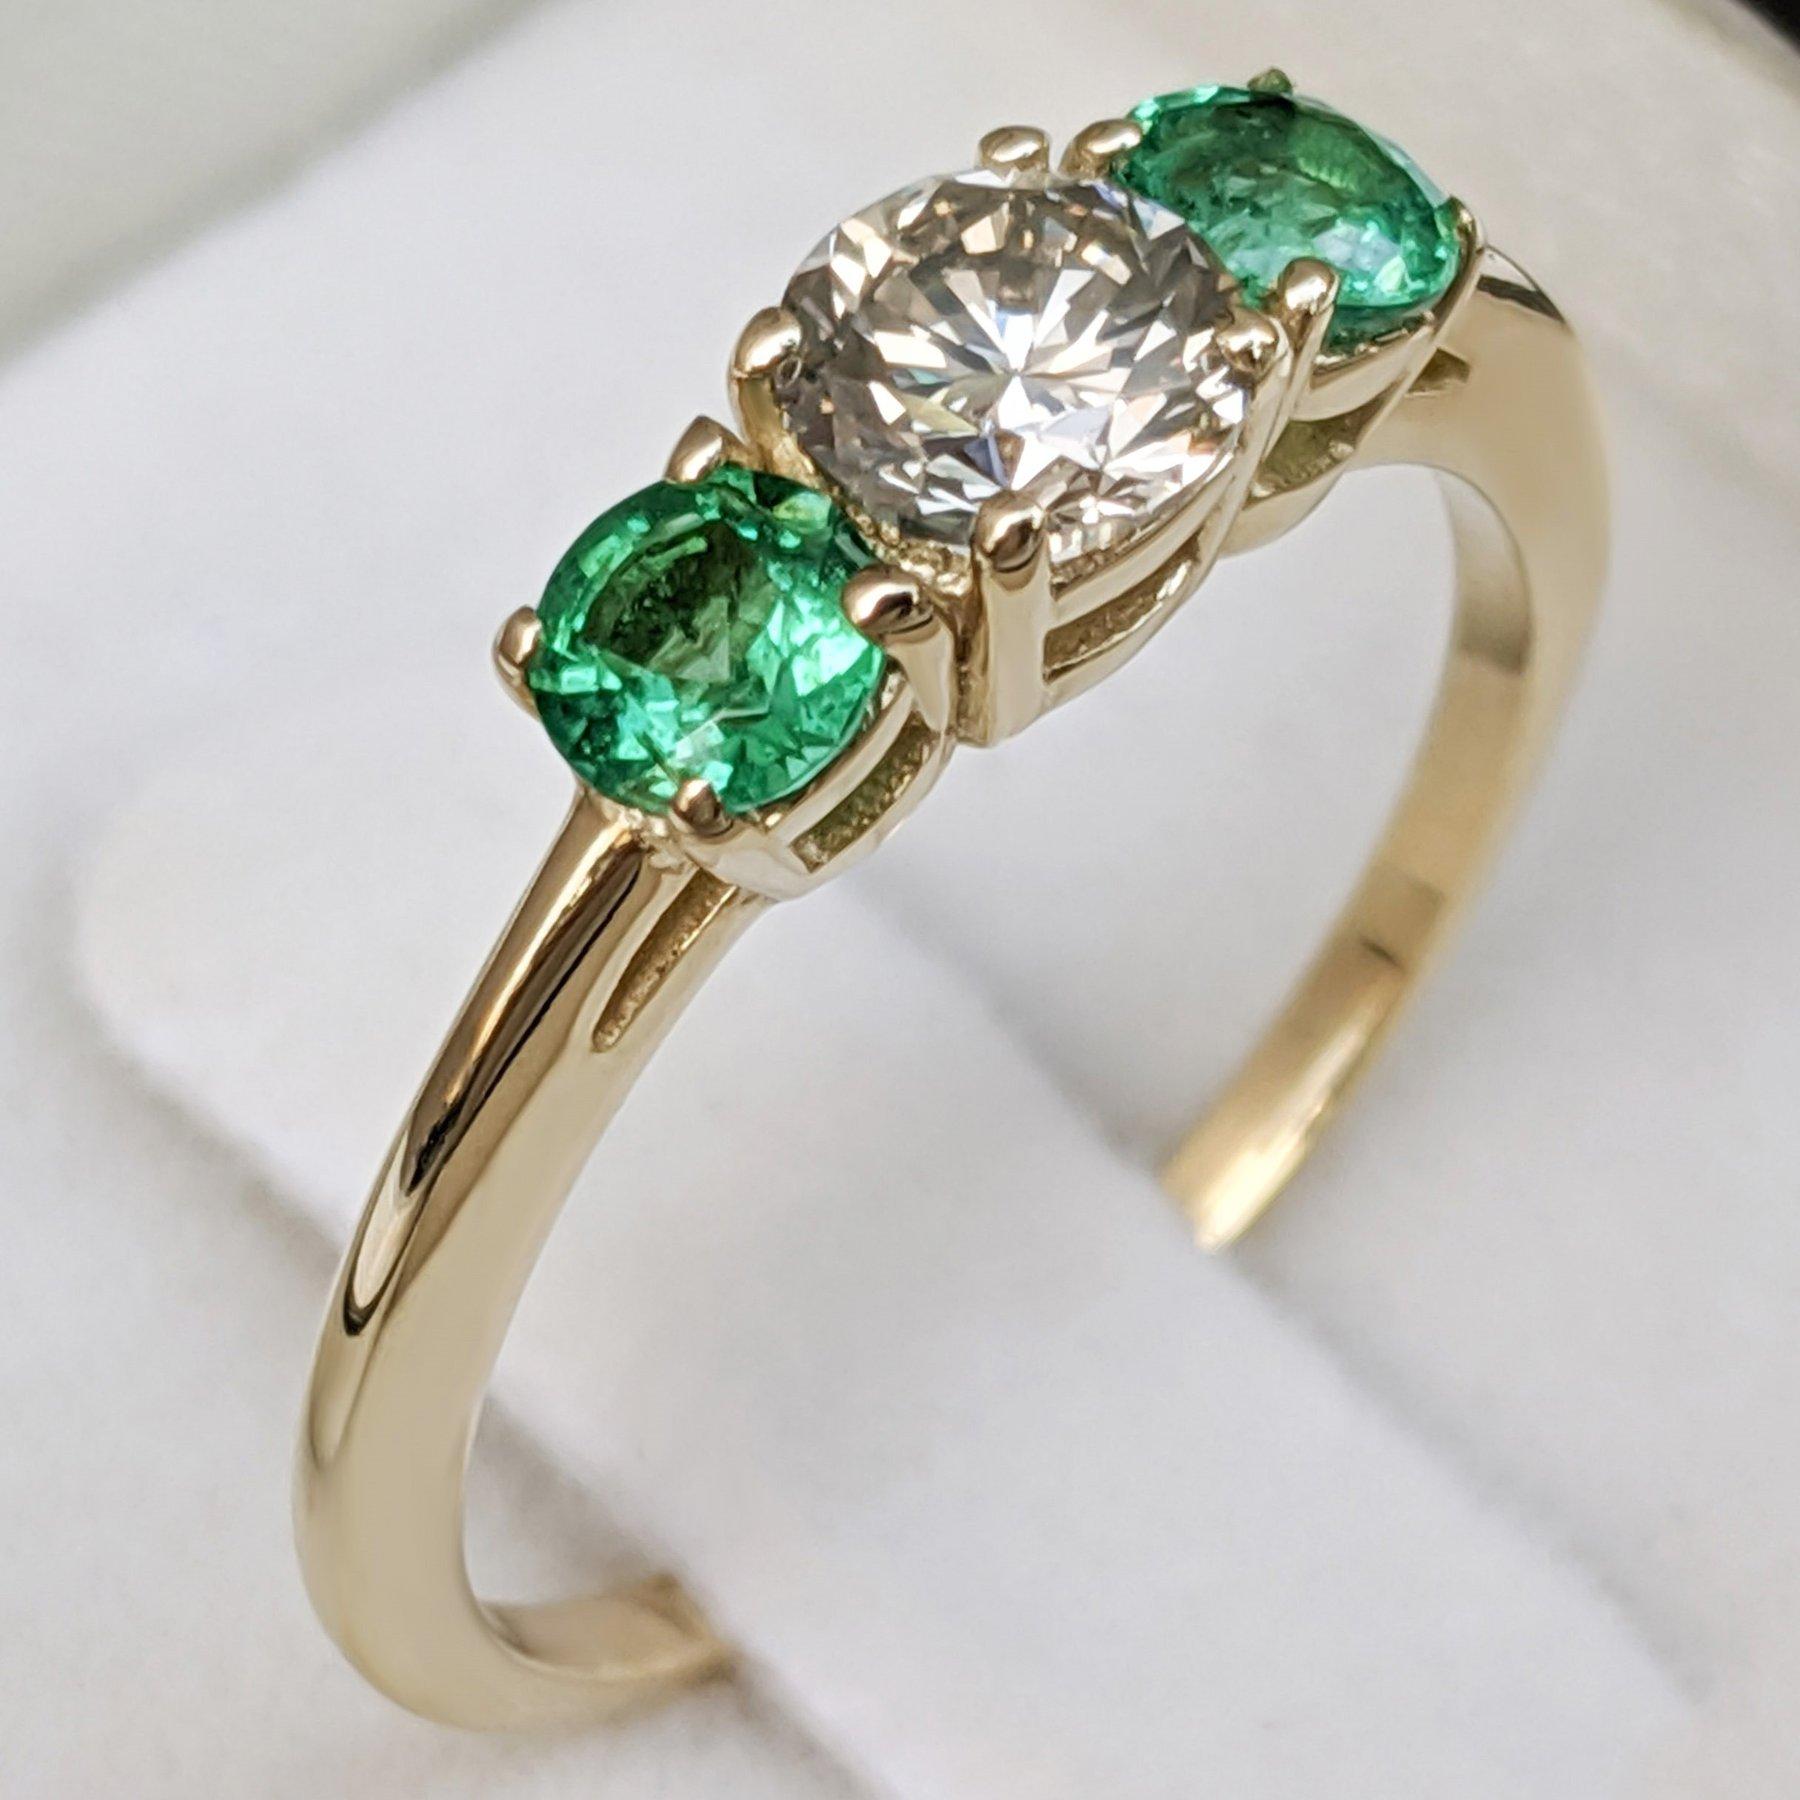 Emerald Cut $1 NO RESERVE!   0.57 Carat Diamond & 0.48Ct Emerald - 14K Yellow Gold Ring For Sale